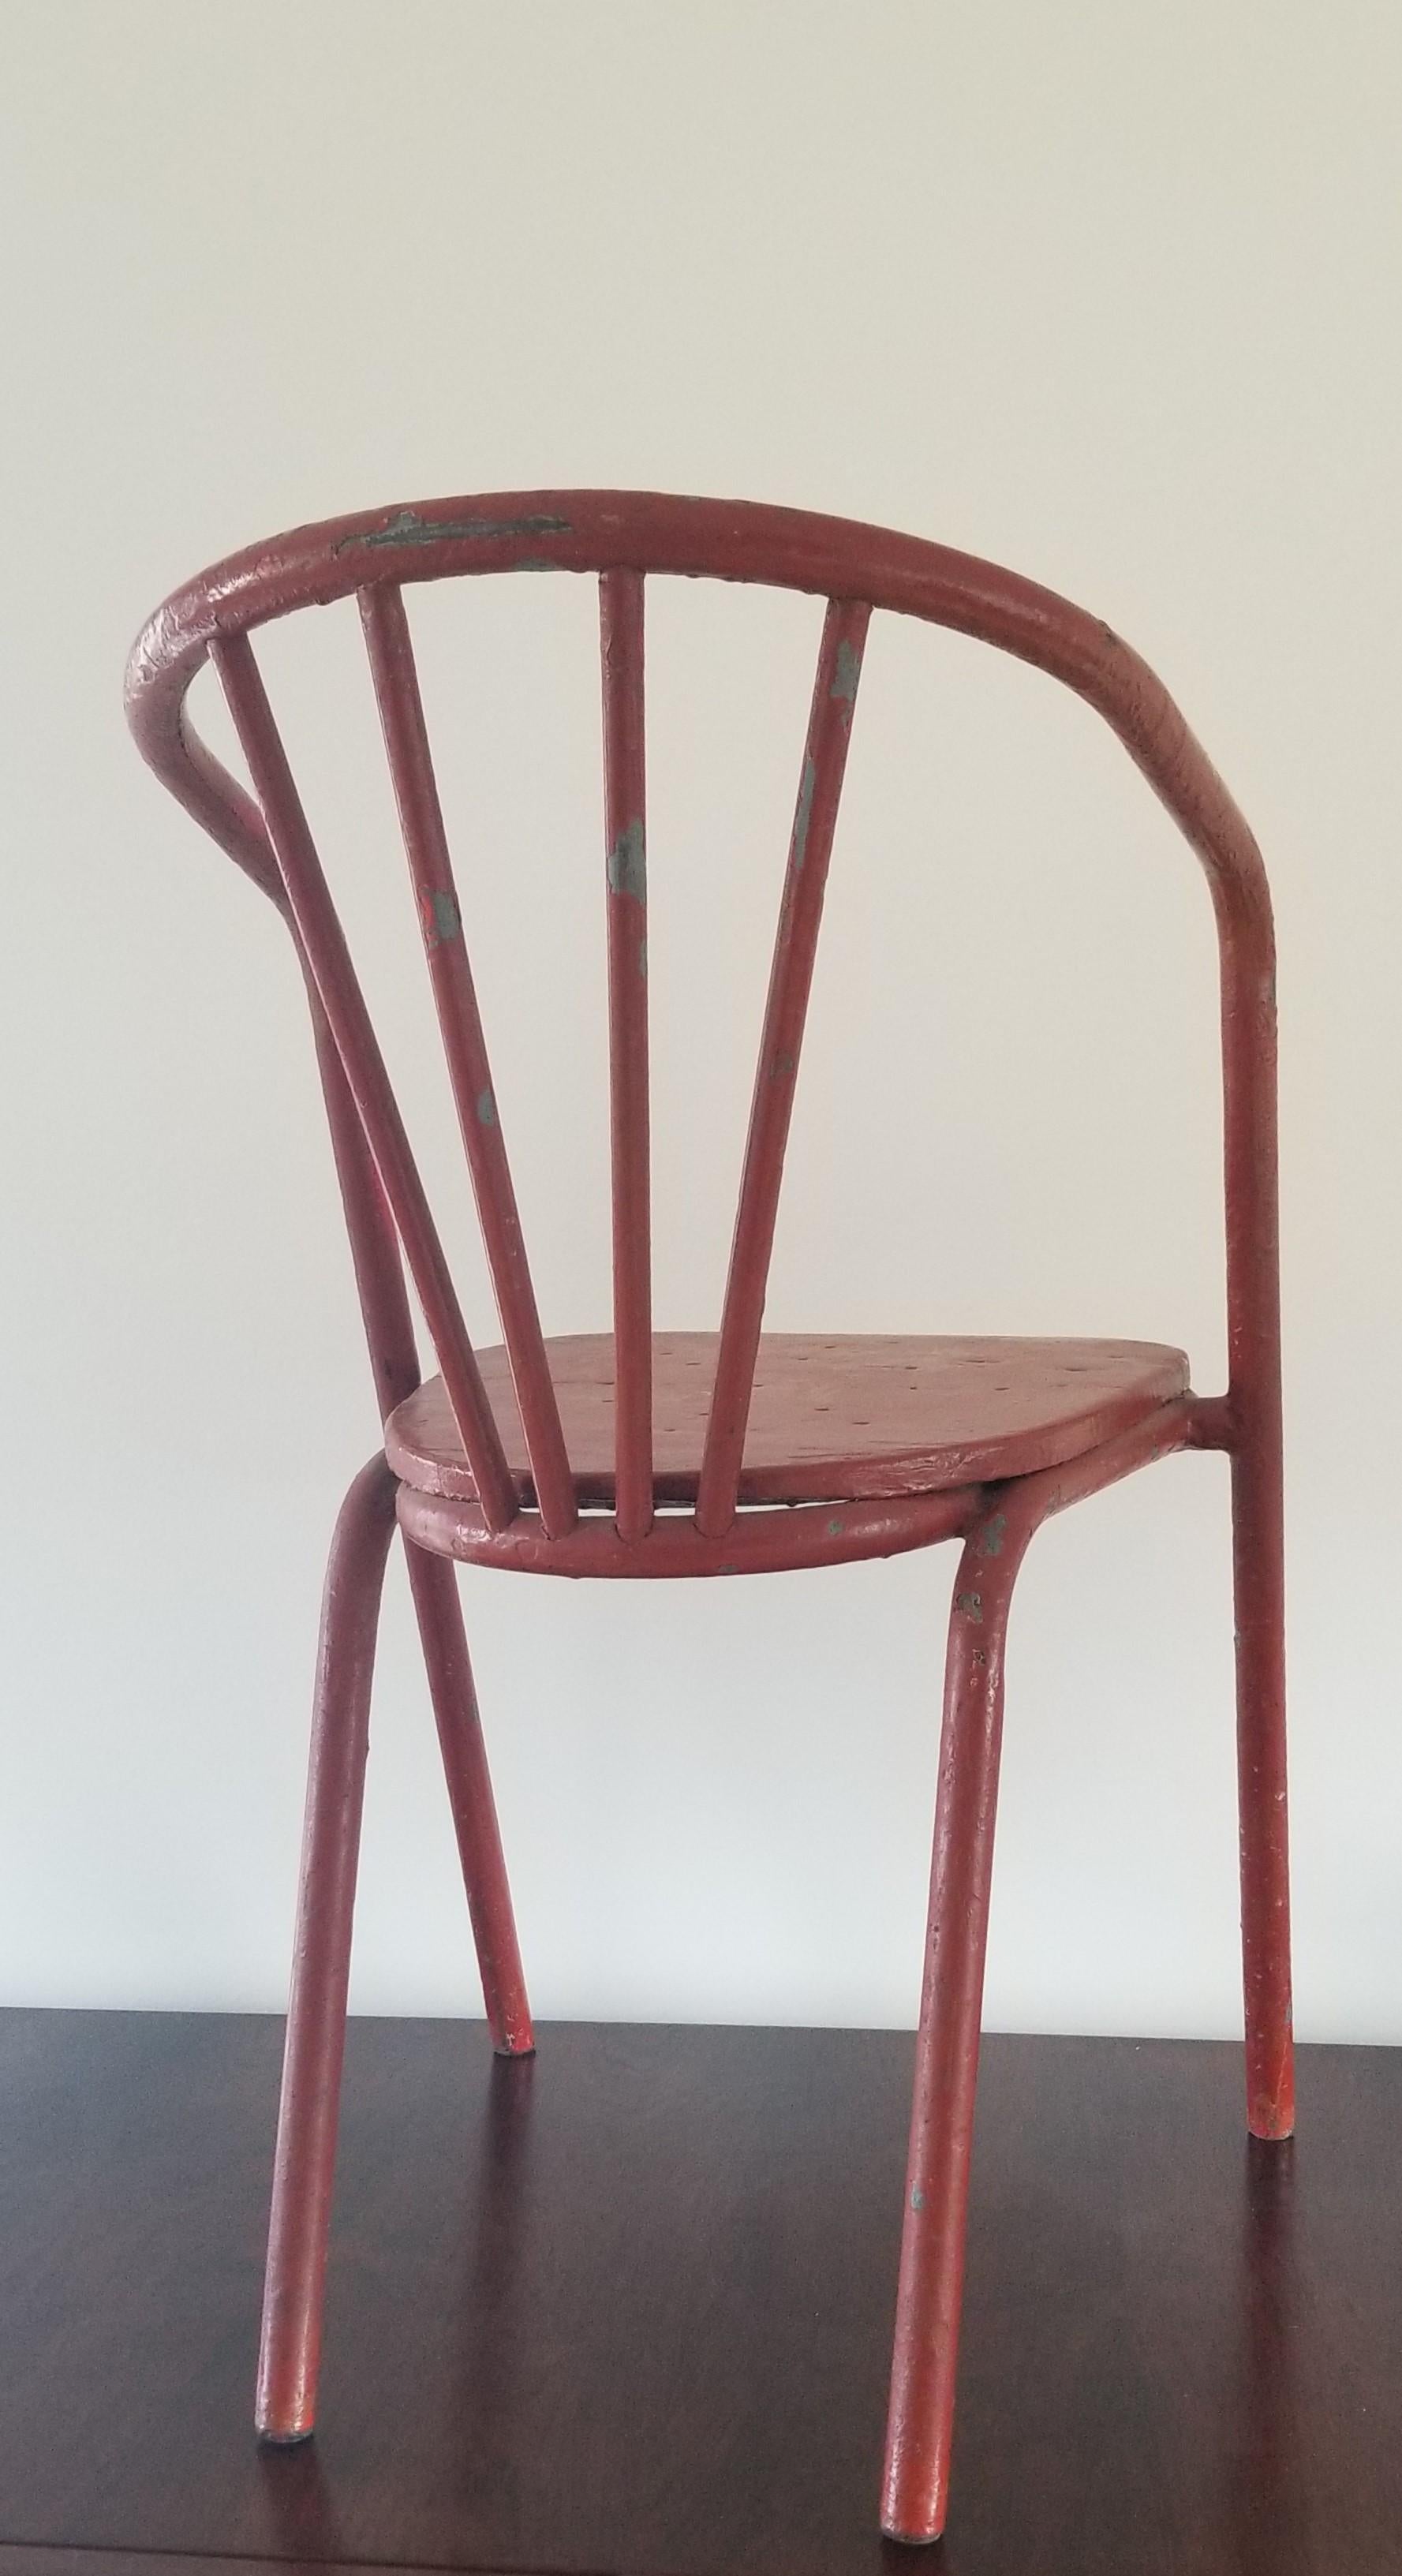 French Modernist Chair by Robert Mallet Stevens, France, 1930s